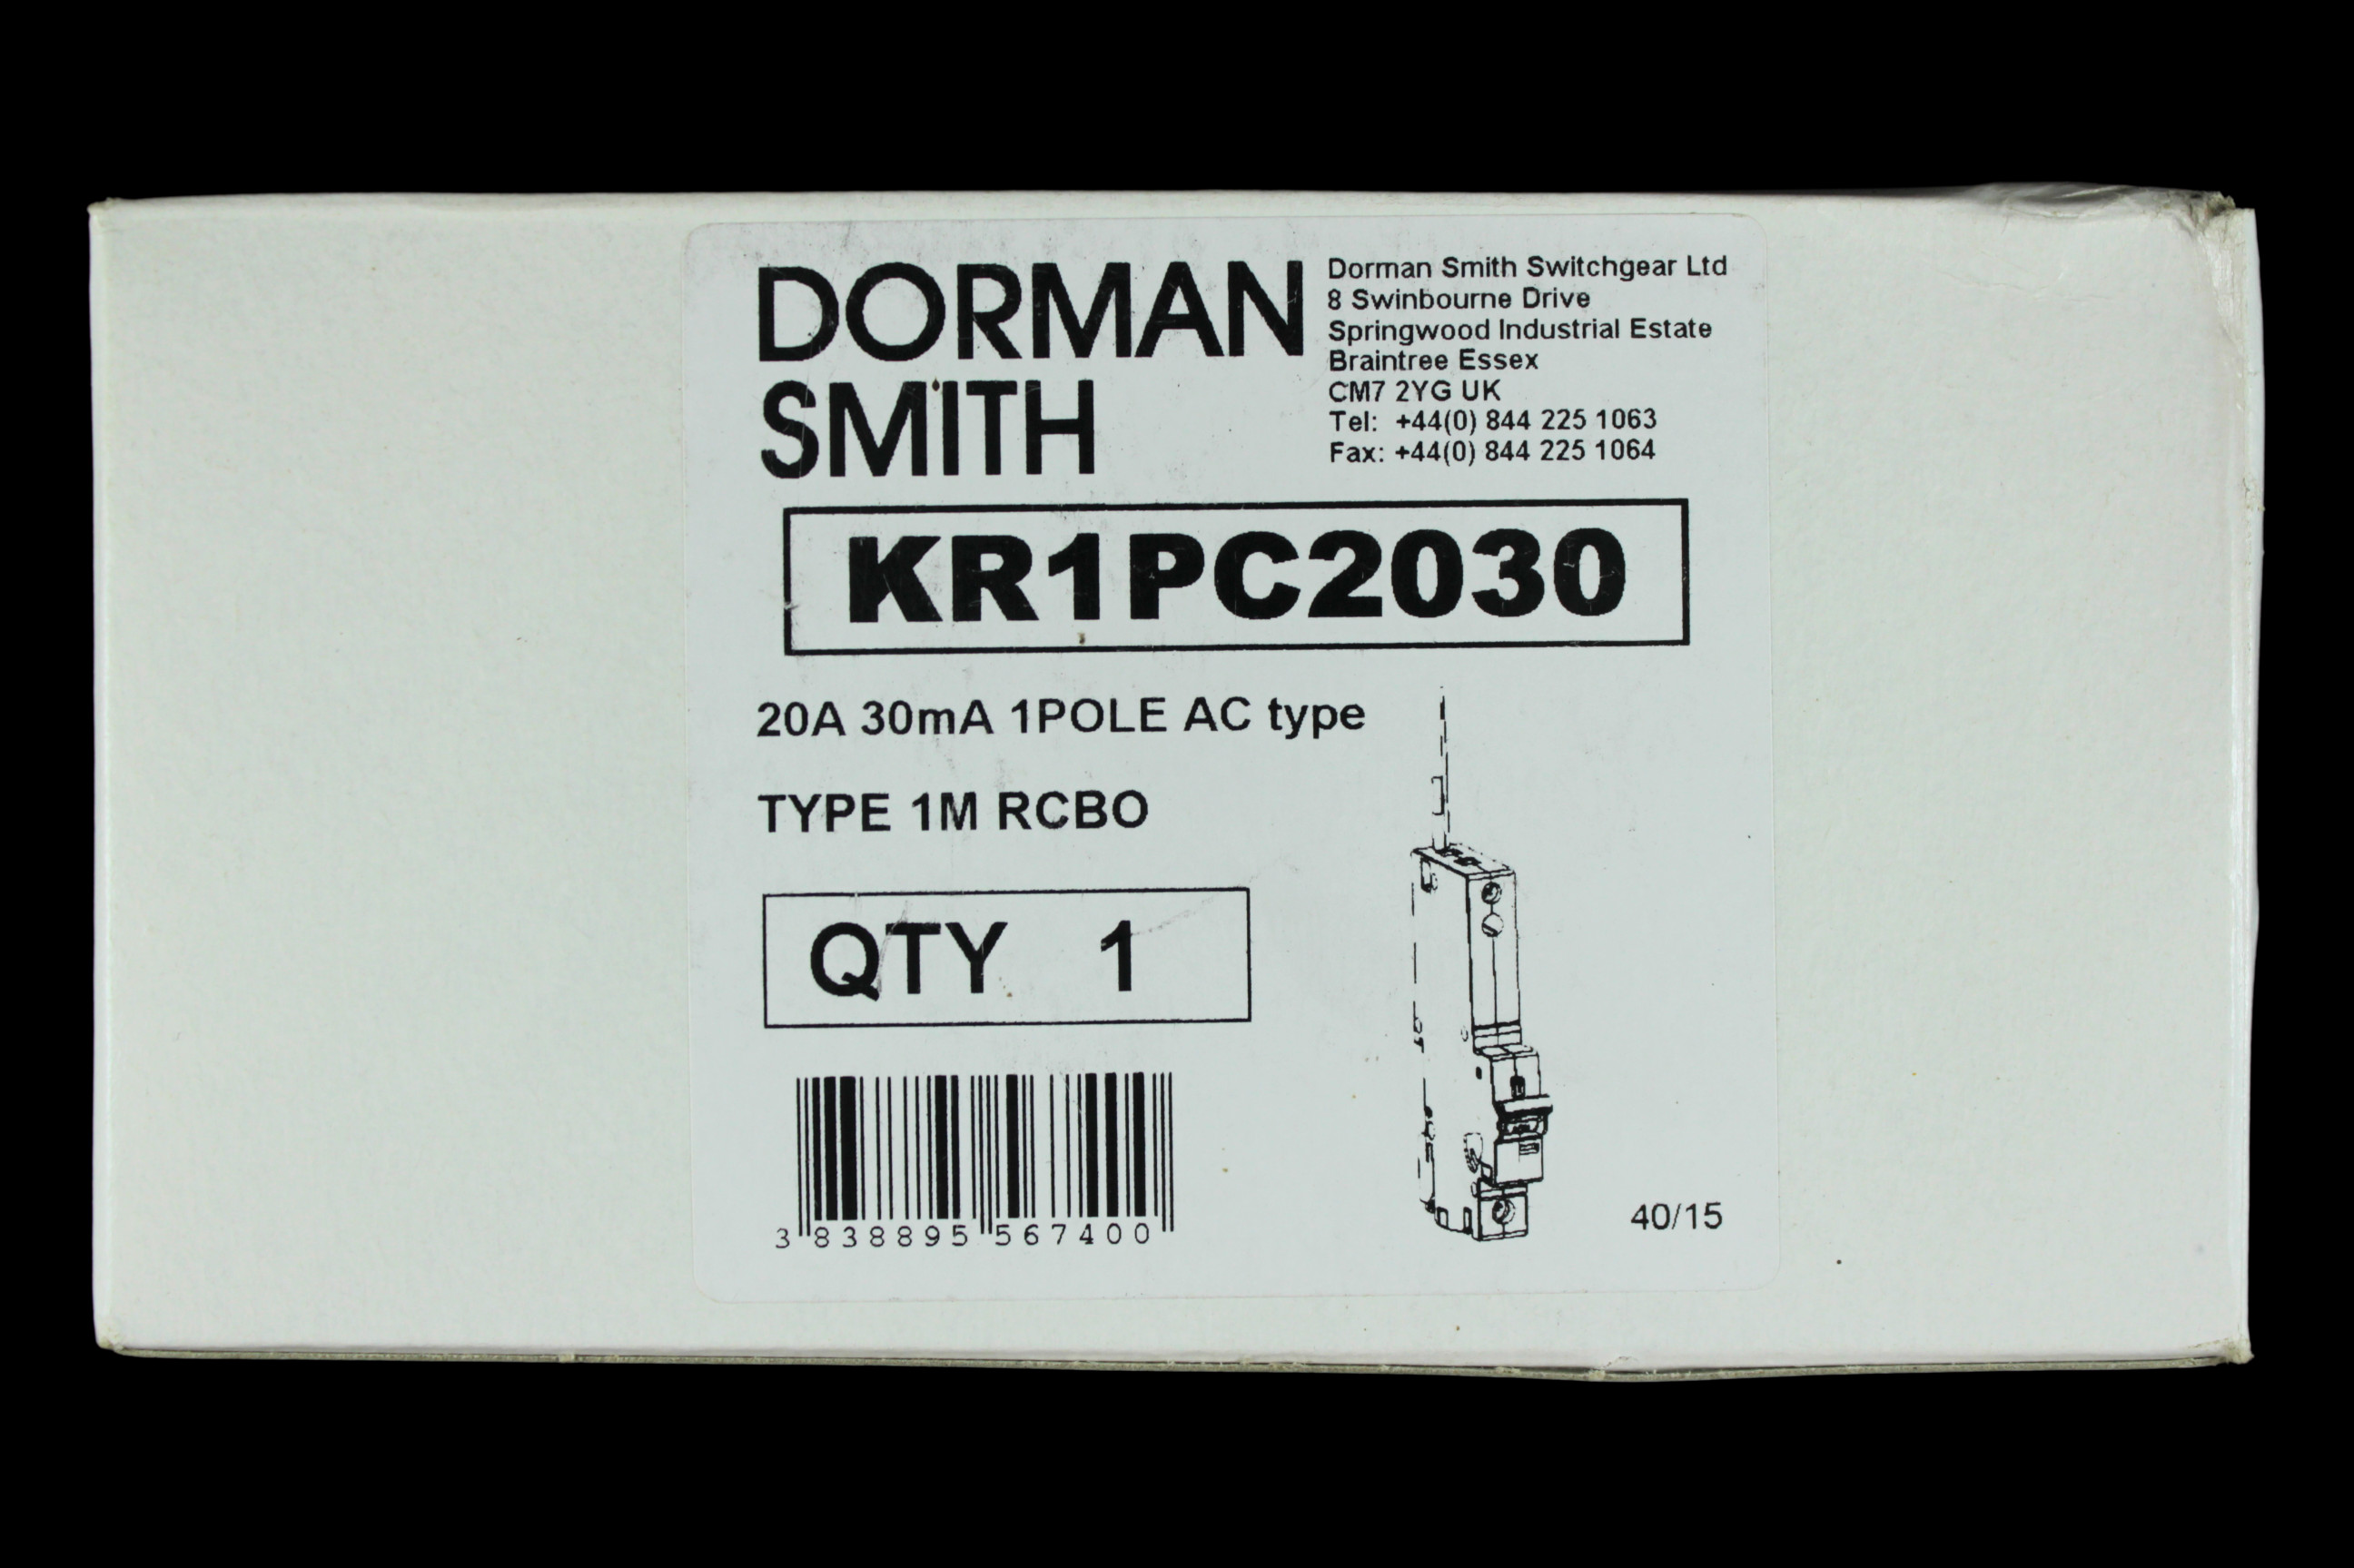 DORMAN SMITH 20 AMP CURVE C 10kA 30mA RCBO TYPE AC KR1PC2030